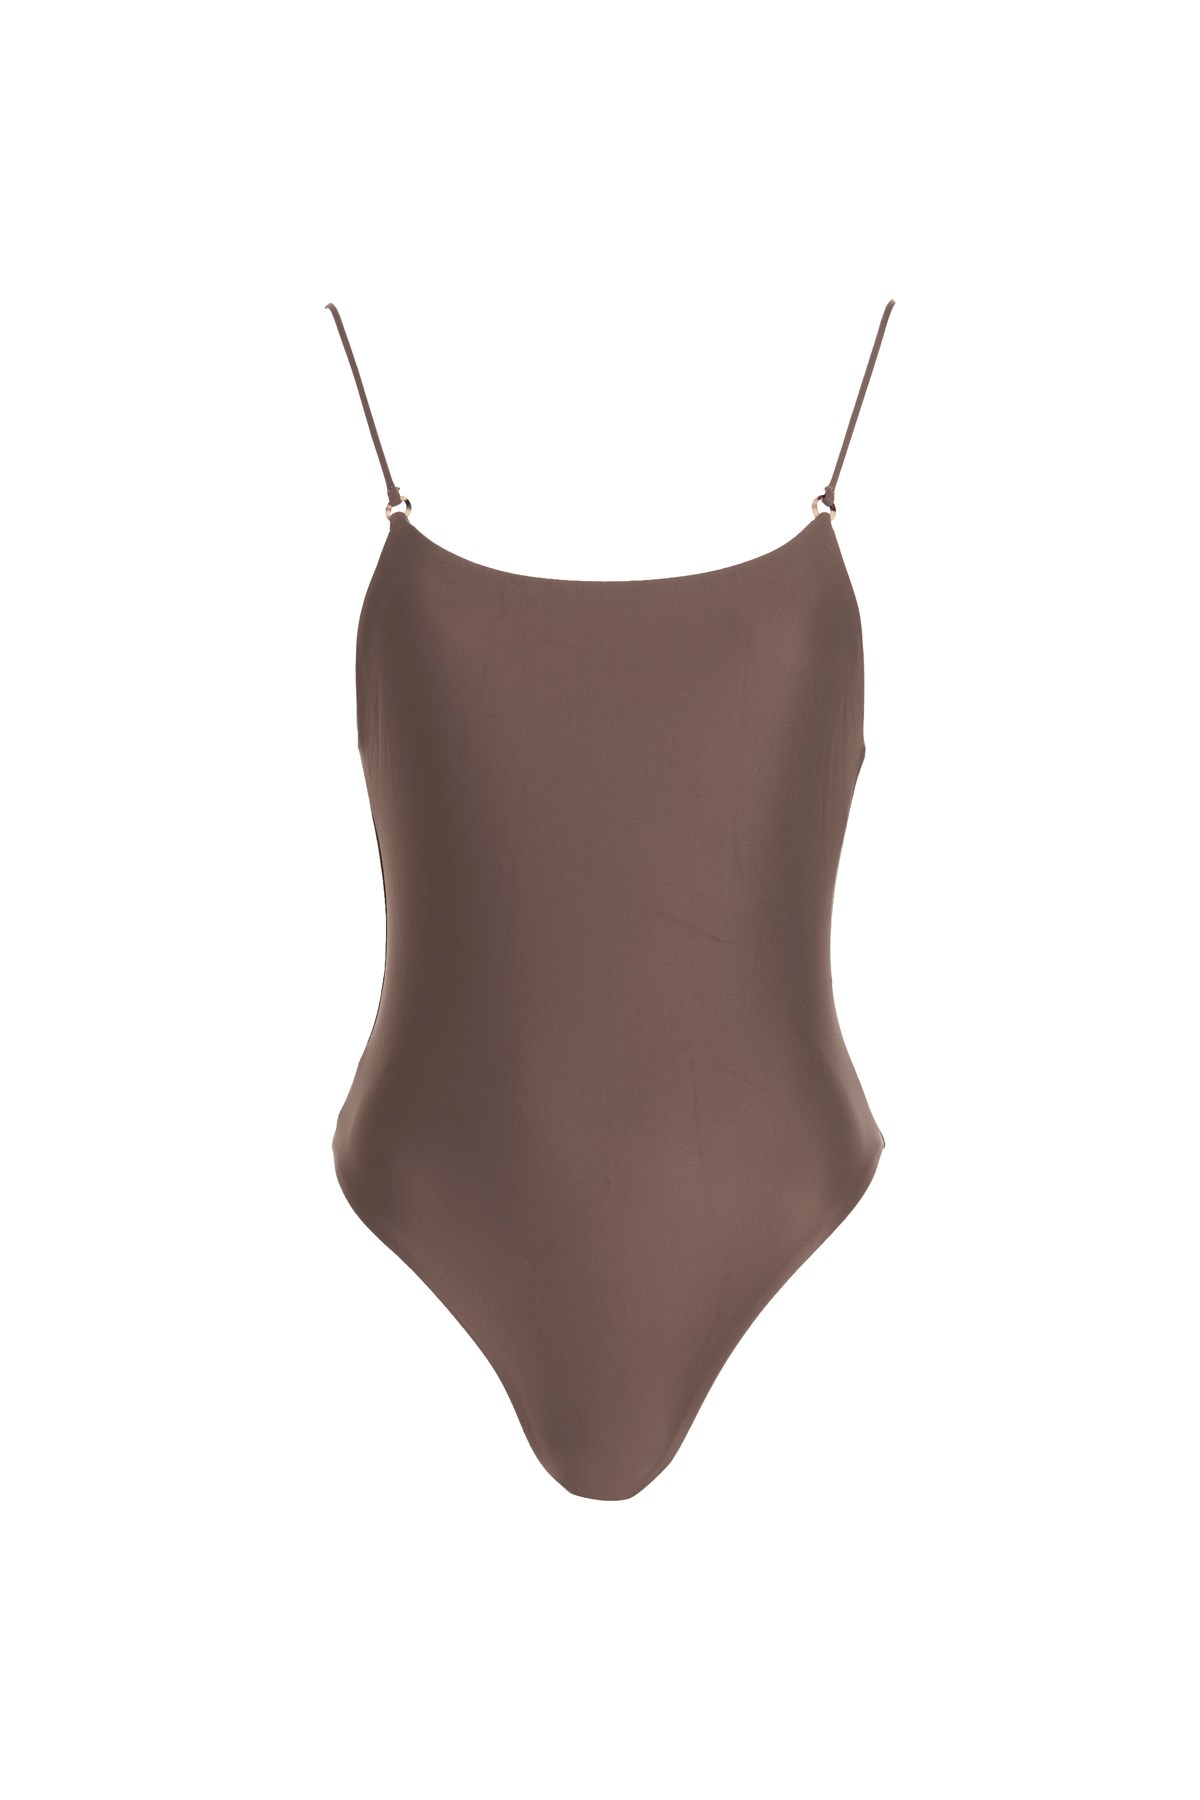 JADE SWIM ‘Hinge’ One-Piece Swimsuit